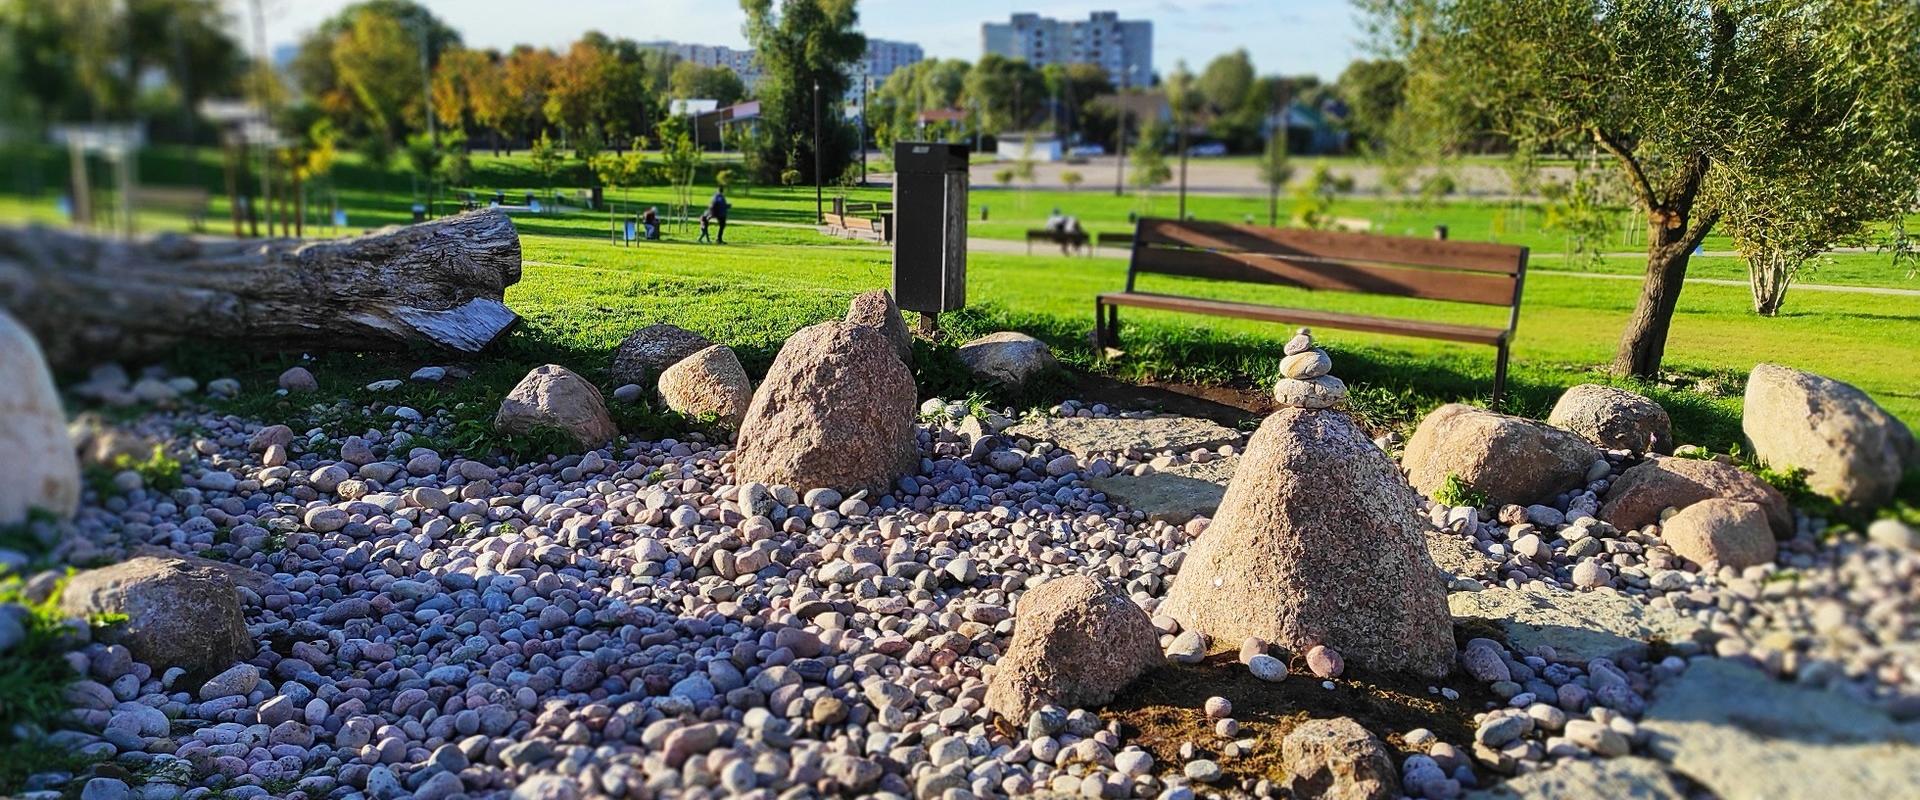 Narvas publiskais parks "EV 100"